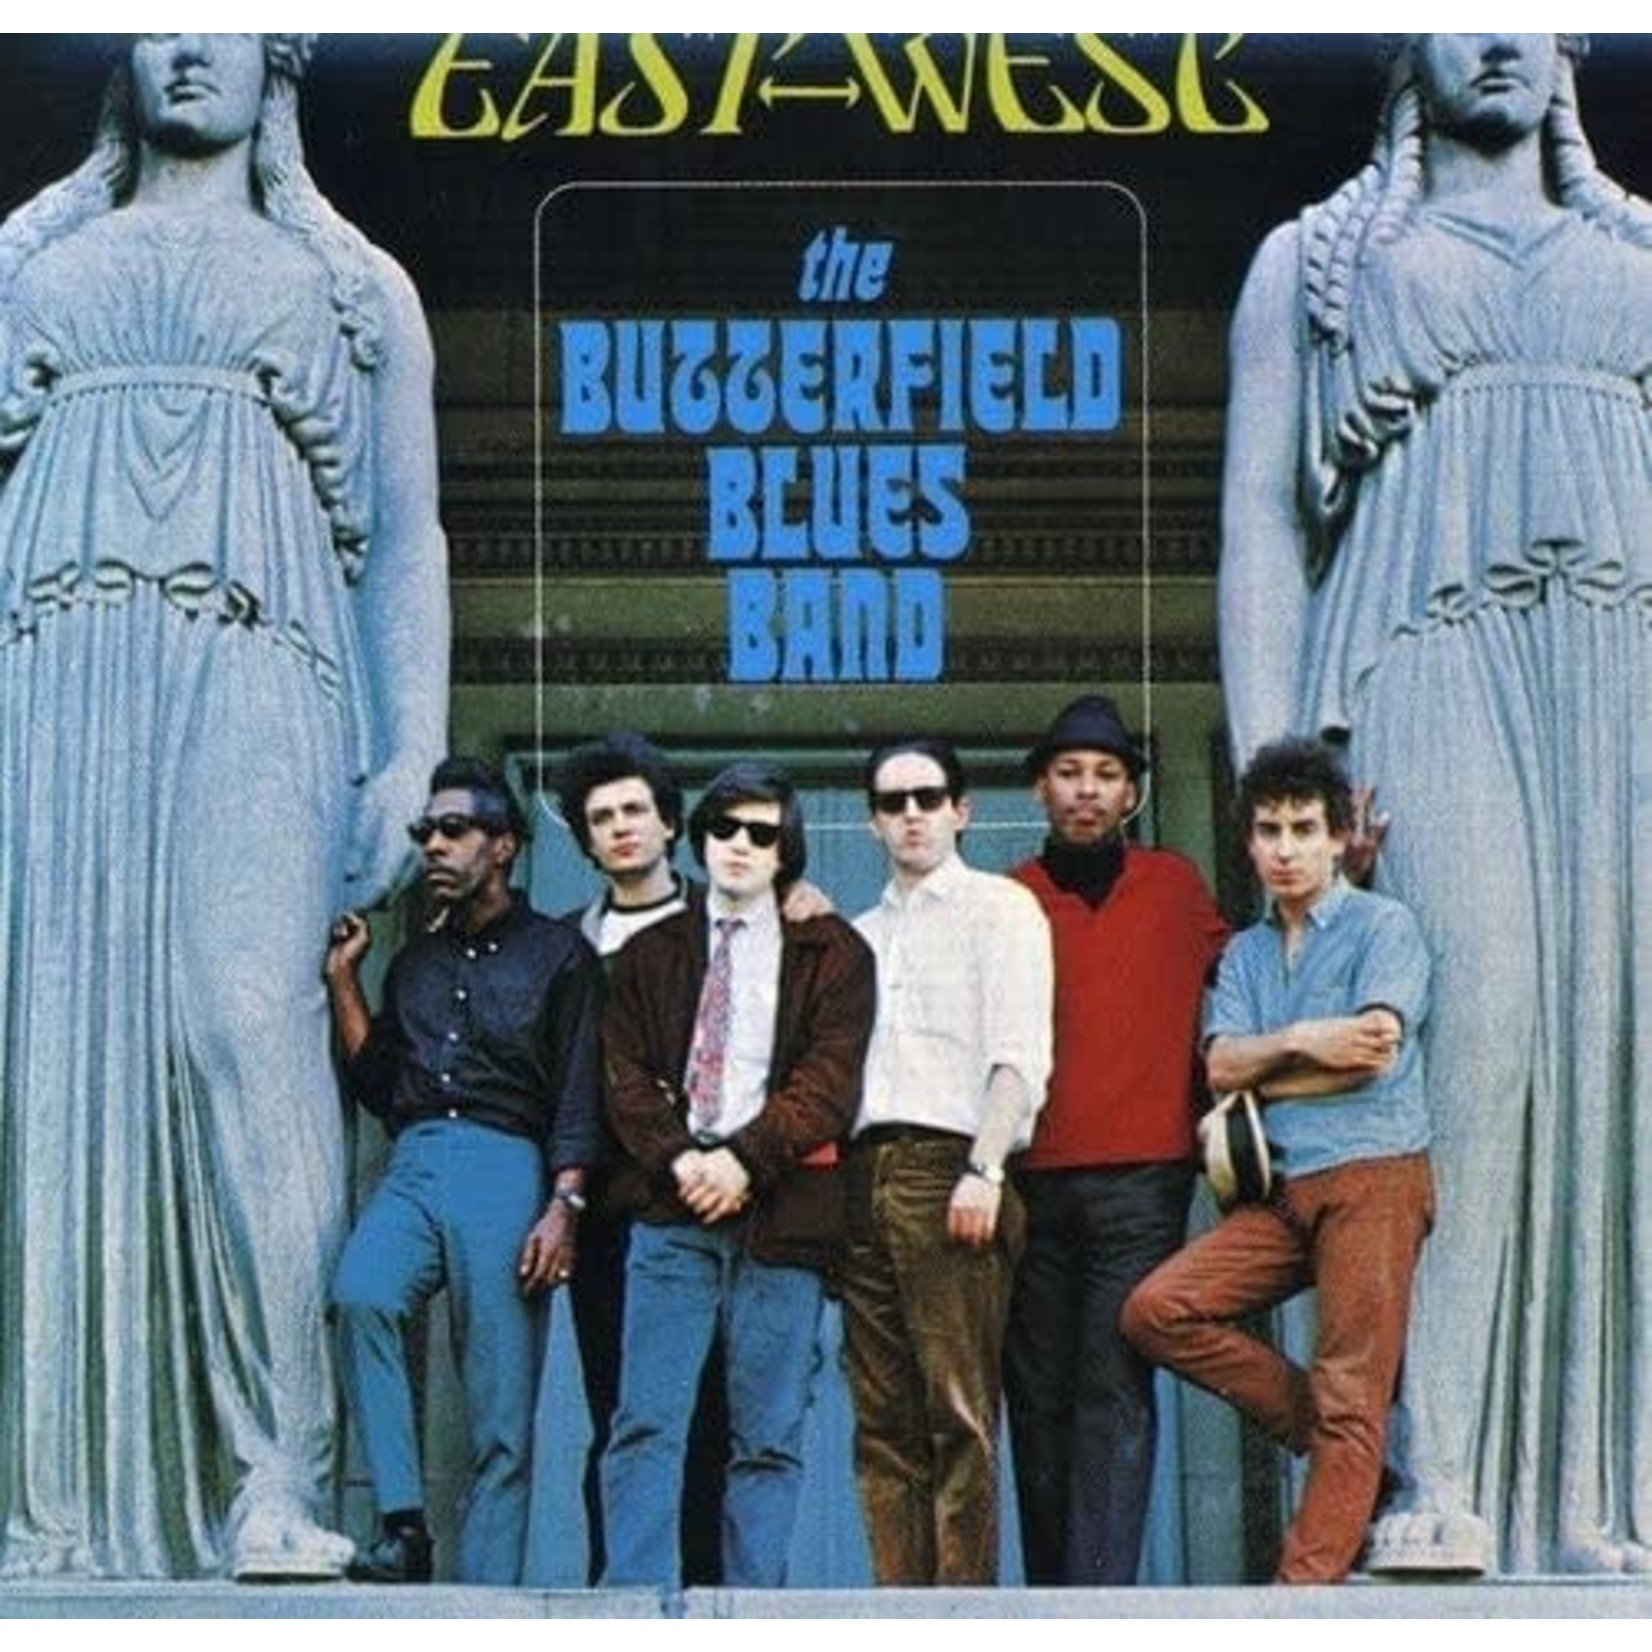 Paul Butterfield Blues Band - East-West [CD]